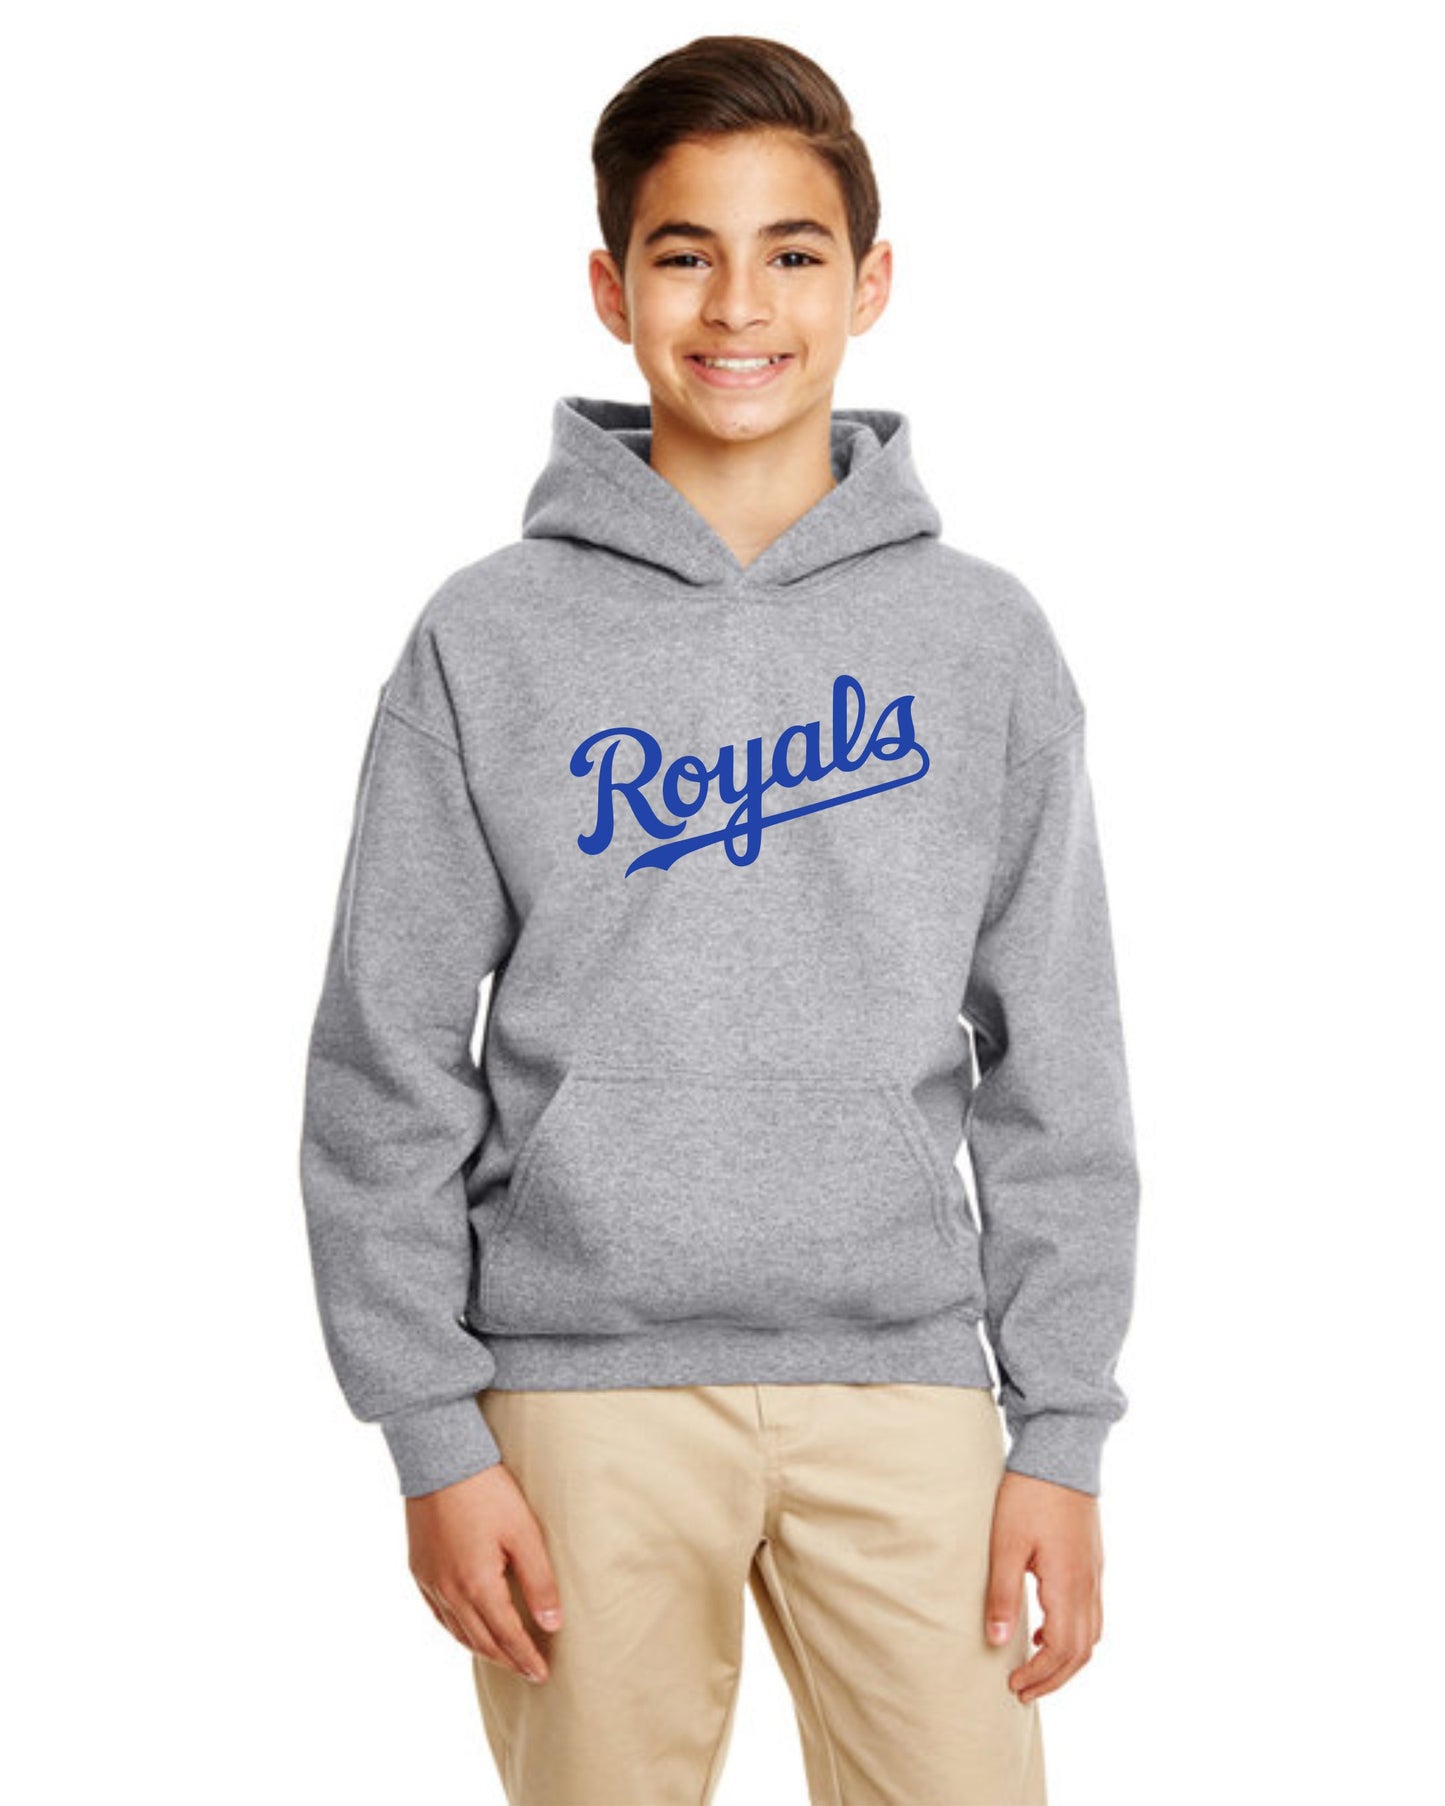 Royals Baseball 50/50 Hoodie - Youth